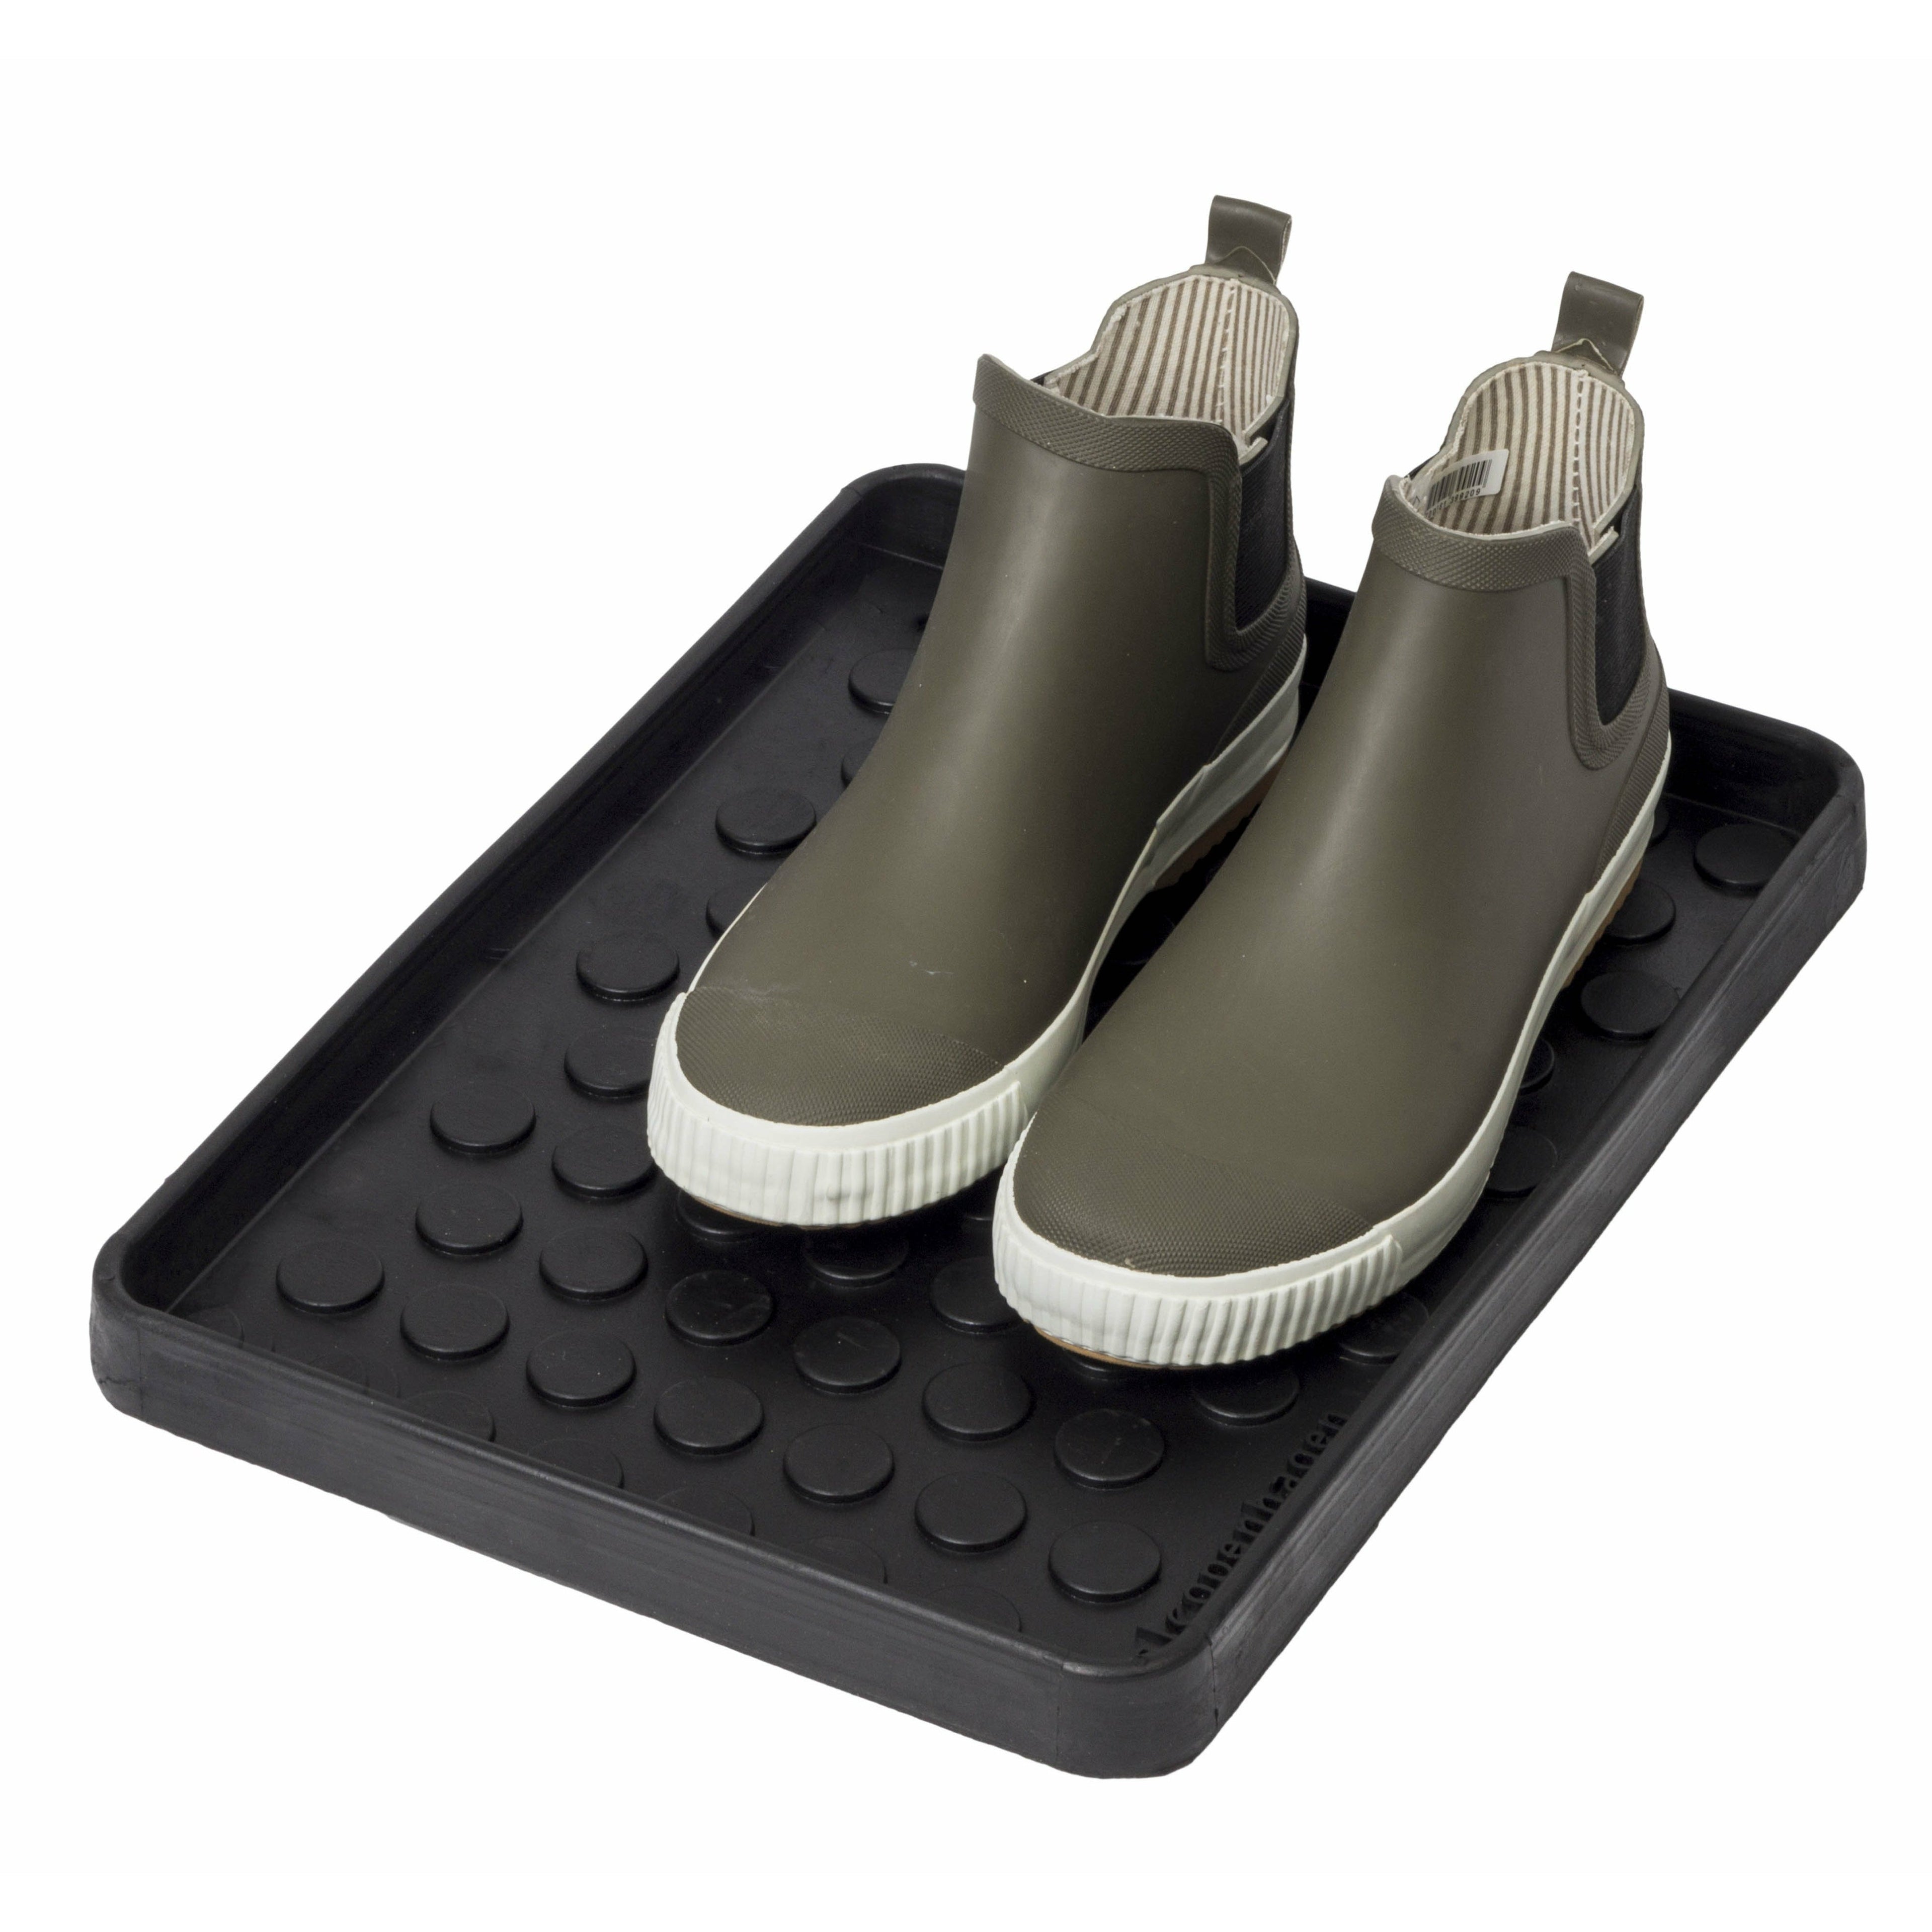 Shoe tray small - dot